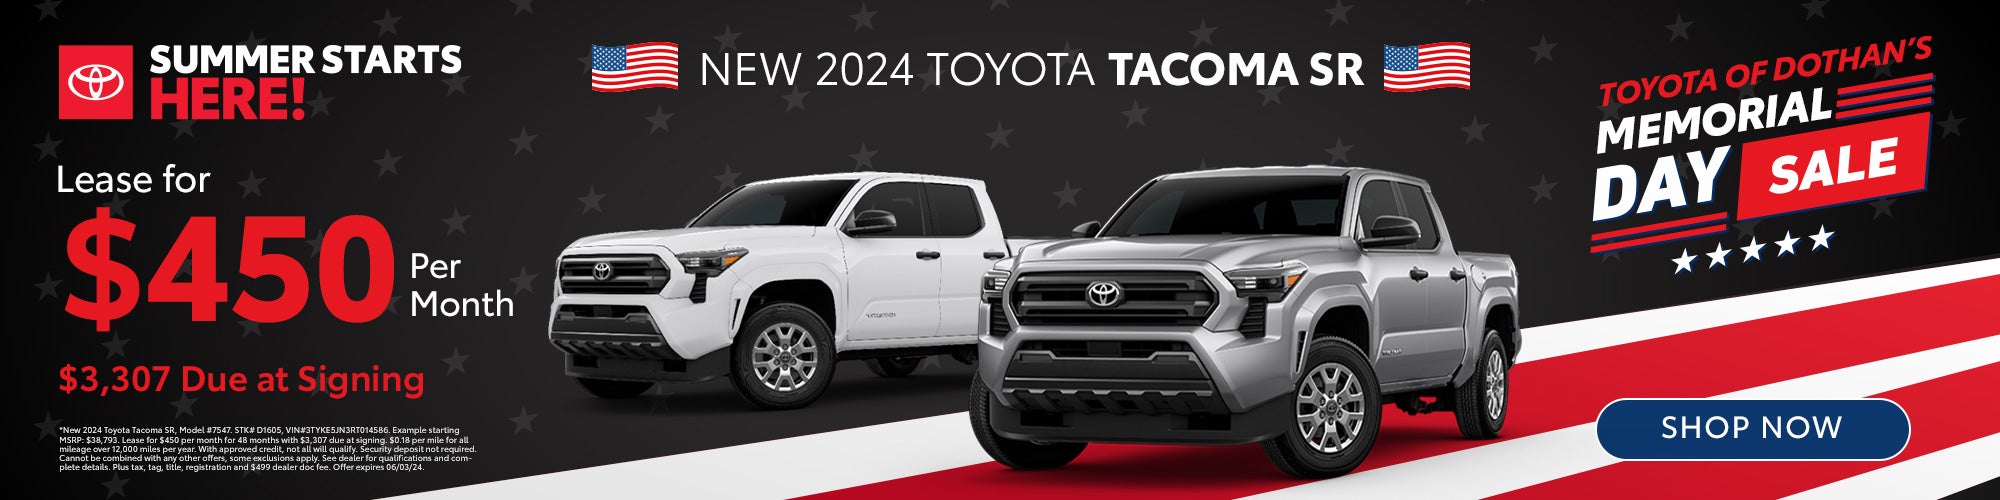 New 2024 Toyota Tacoma SR